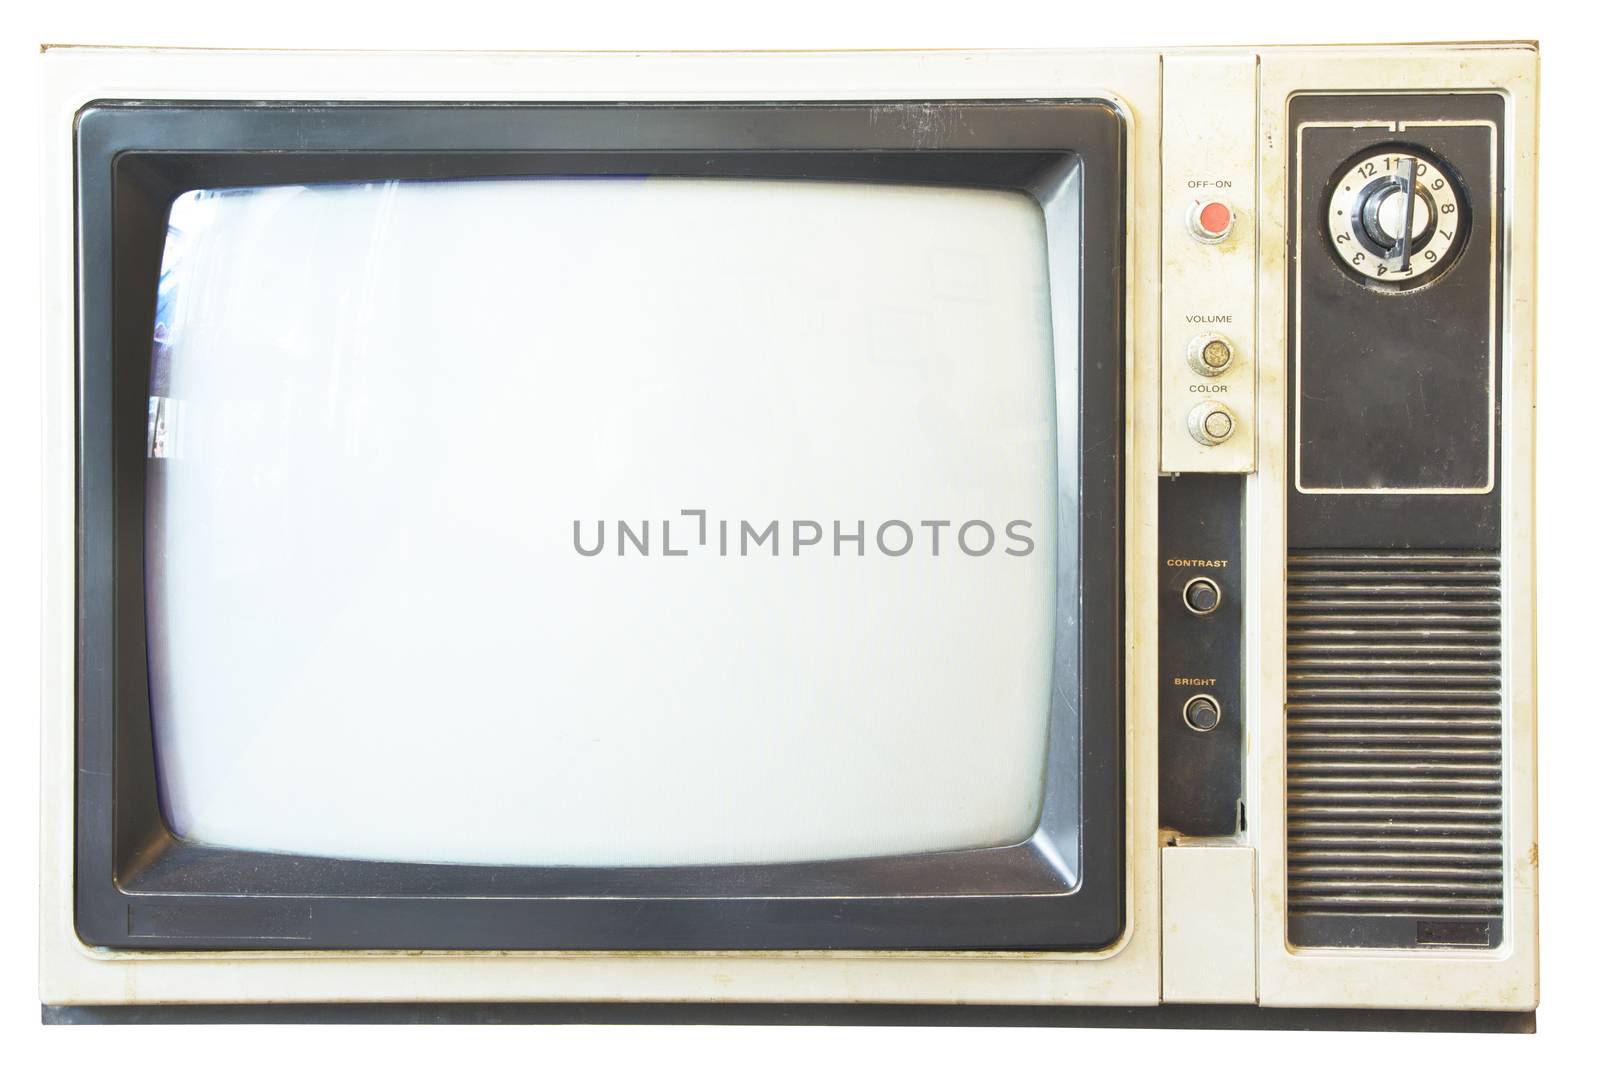 Vintage television by wyoosumran